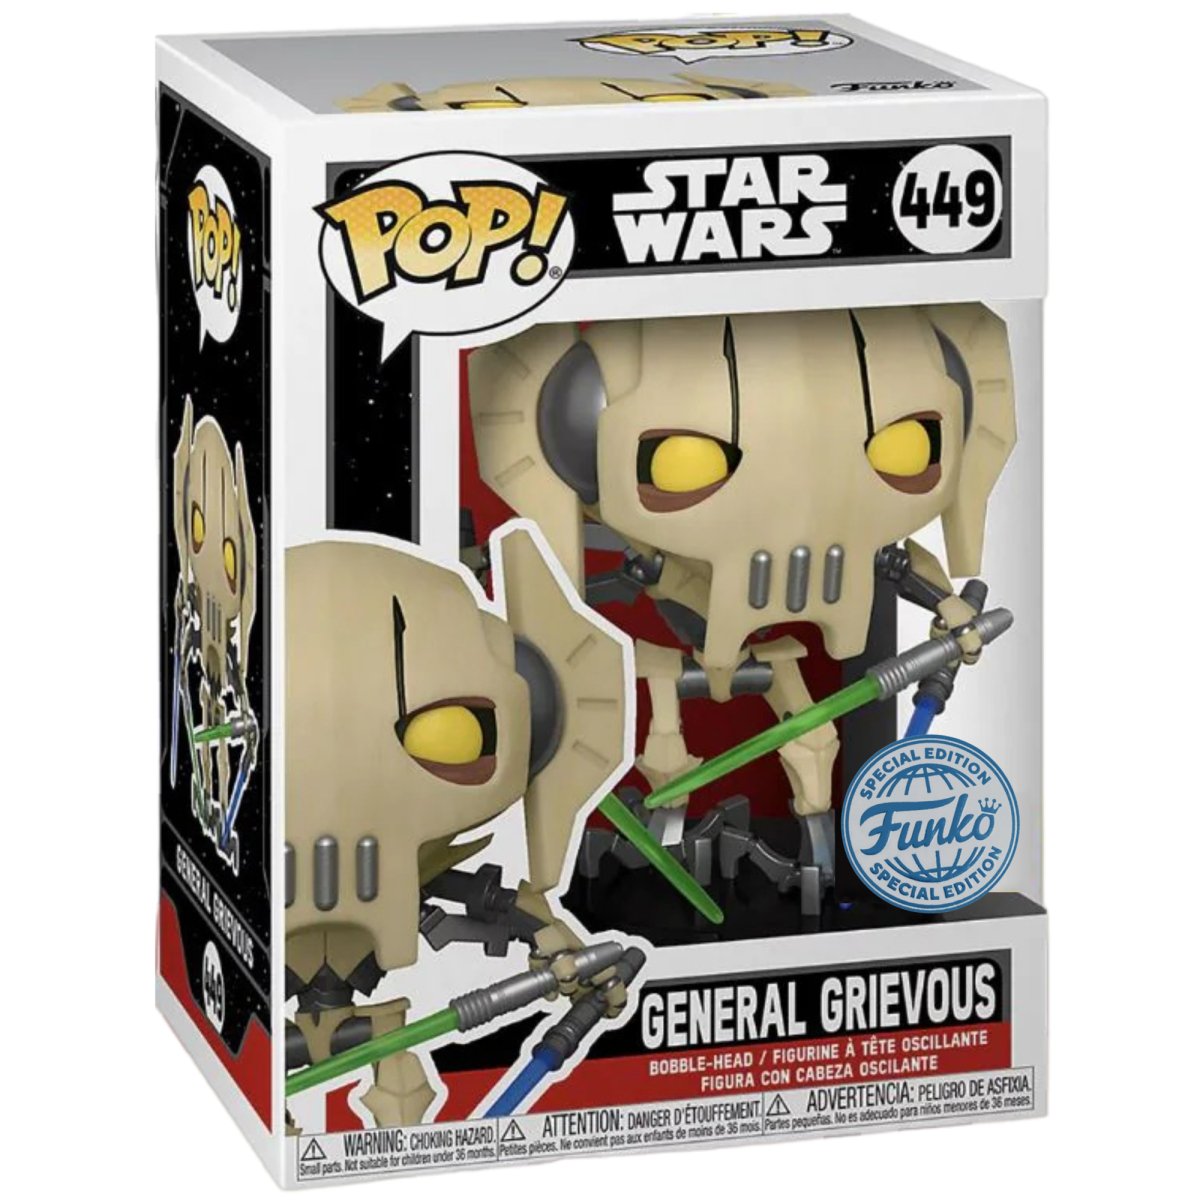 Star Wars - General Grievous (Special Edition) #449 - Funko Pop! Vinyl Star Wars - Persona Toys